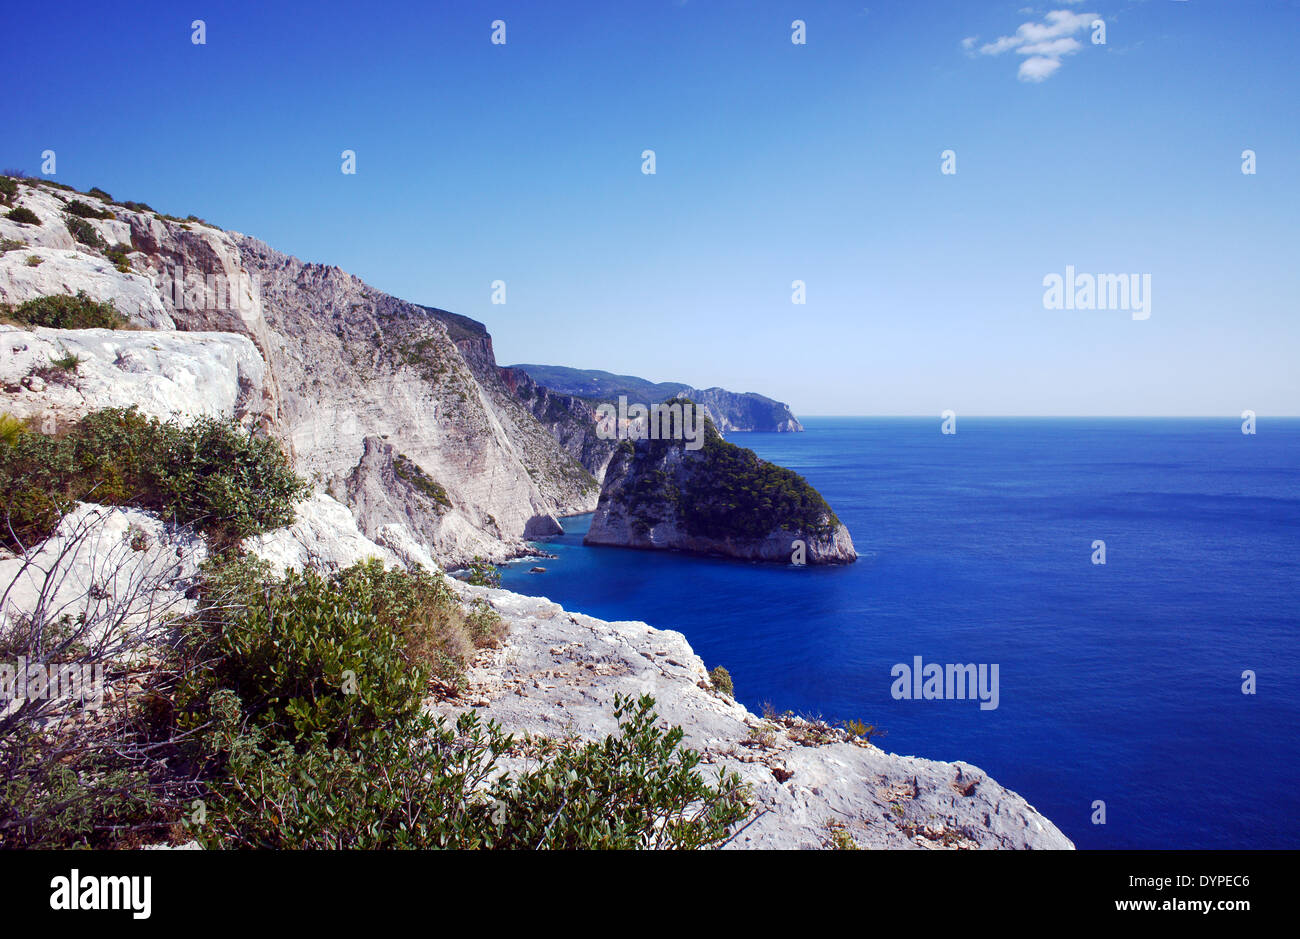 cliff coast of the Greek island of Zakynthos Stock Photo